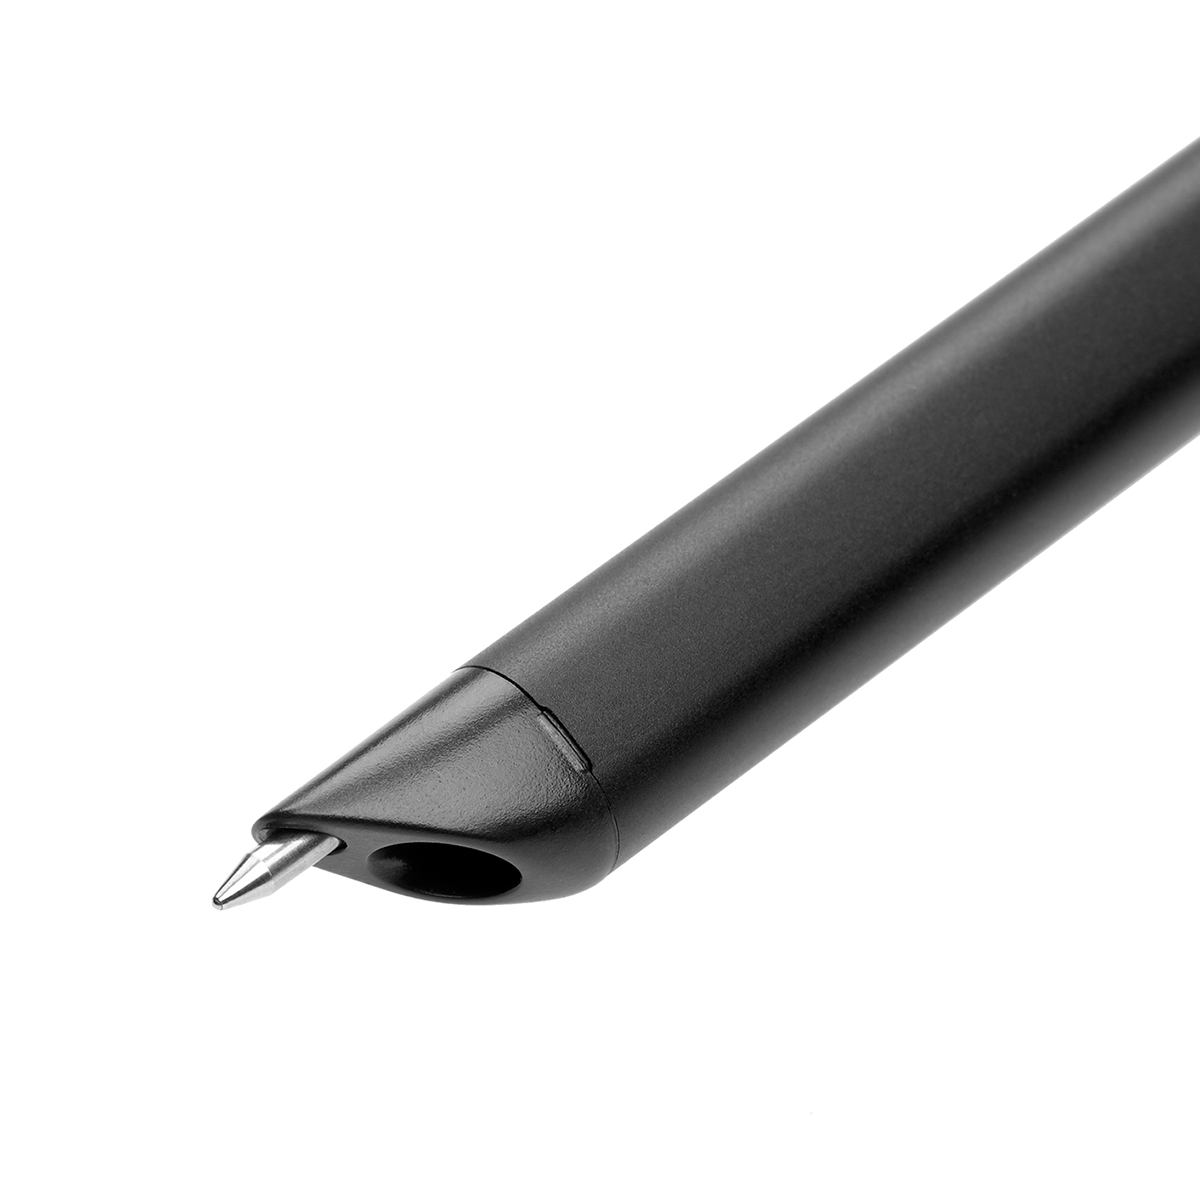 Pen+ Ellipse Digital Pen in the group Pens / Fine Writing / Ballpoint Pens at Pen Store (127741)